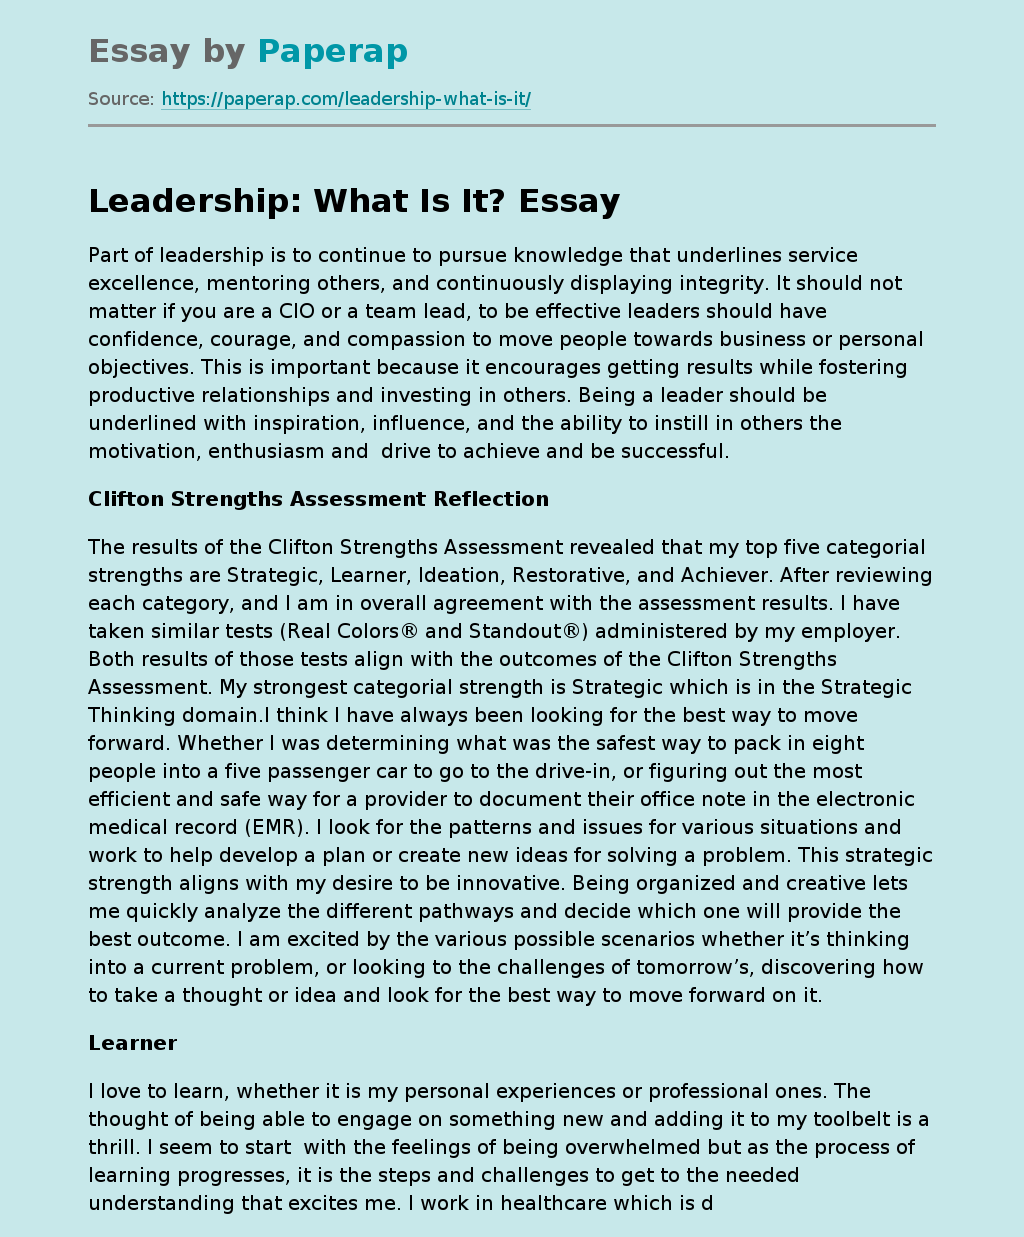 Leadership: What Is It?